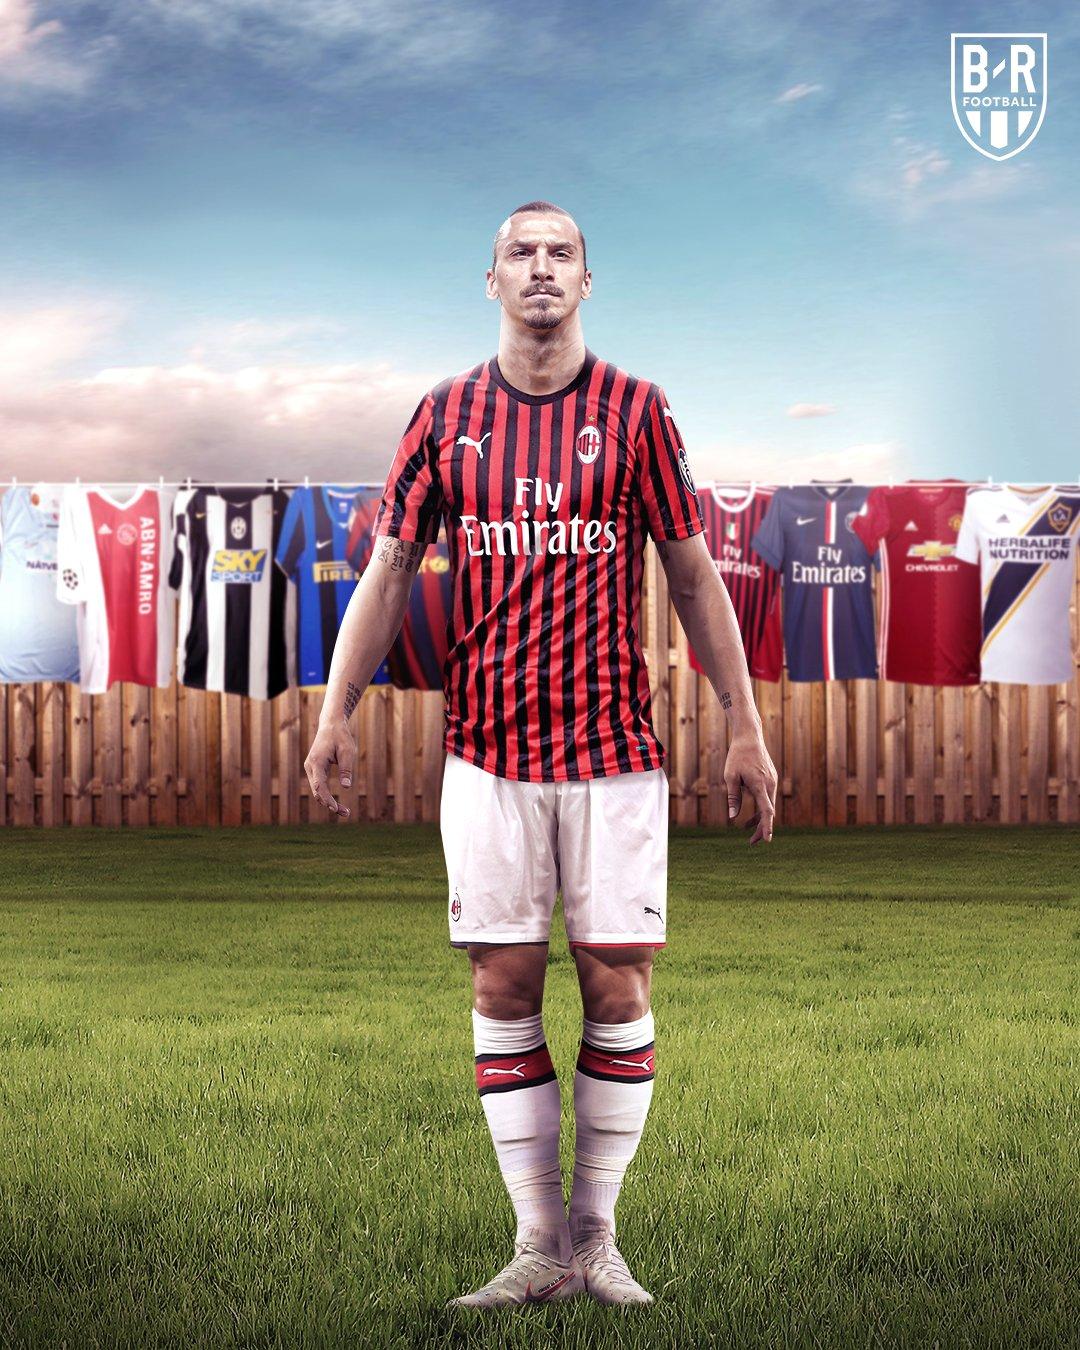 Zlatan Ibrahimović AC Milan wallpaper